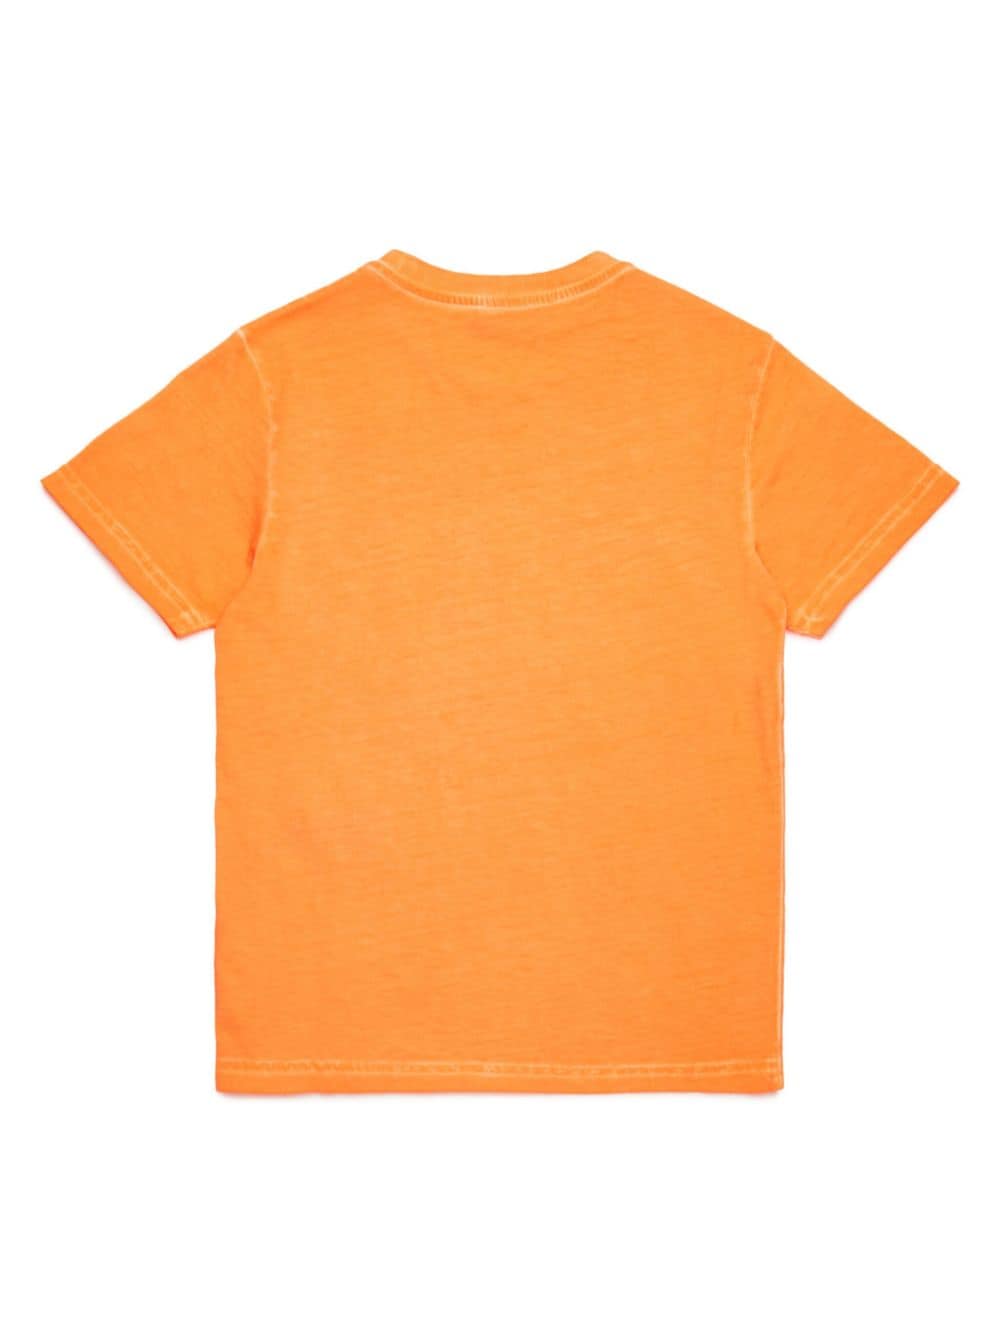 T-shirt arancione unisex